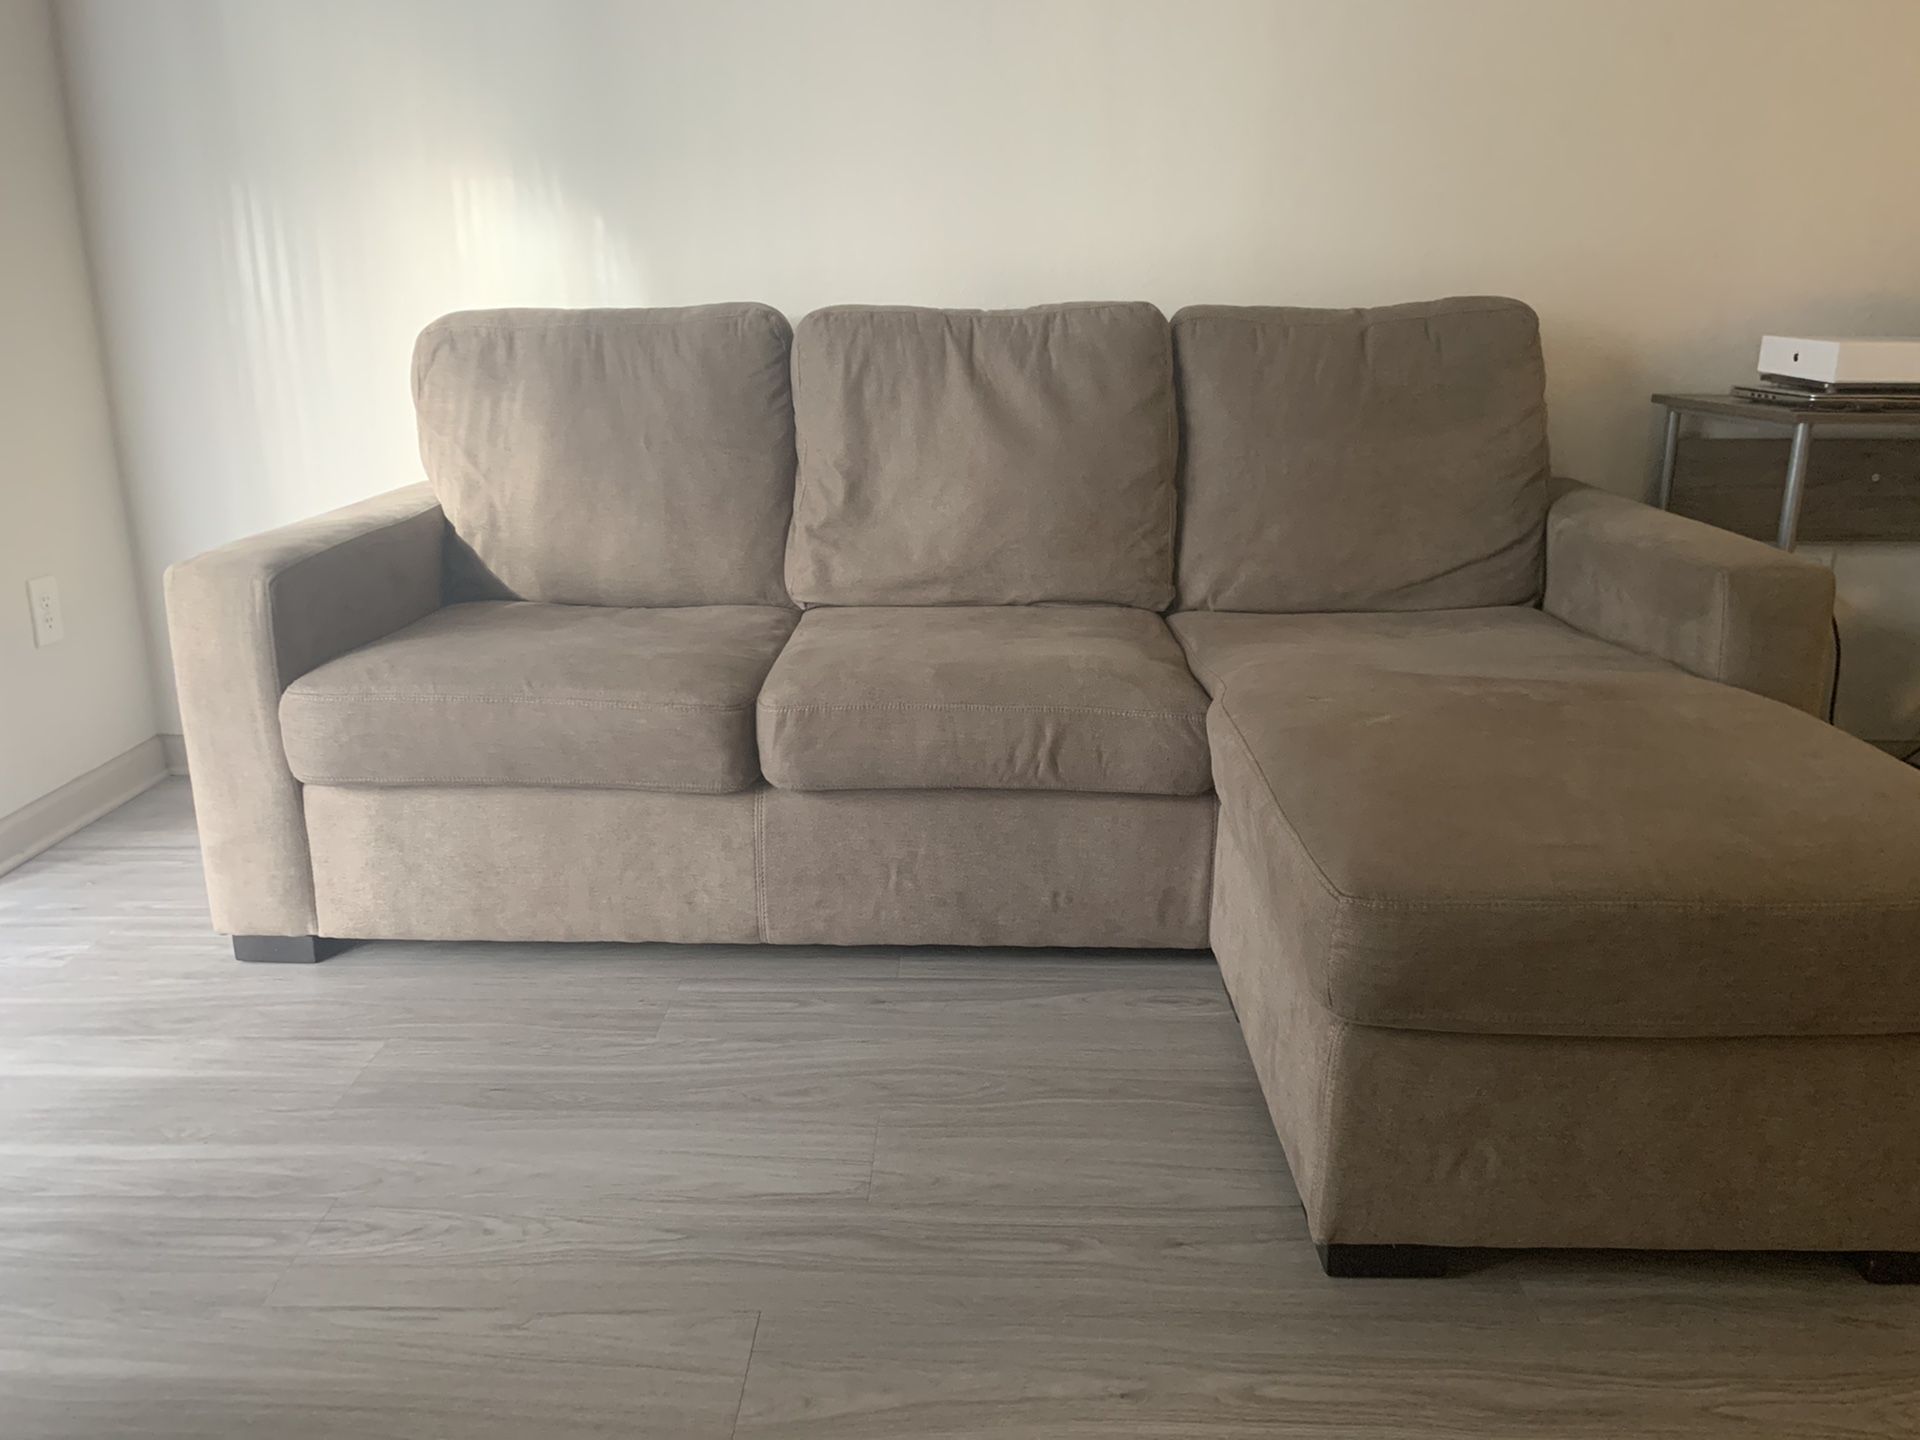 Sofa sectional like new